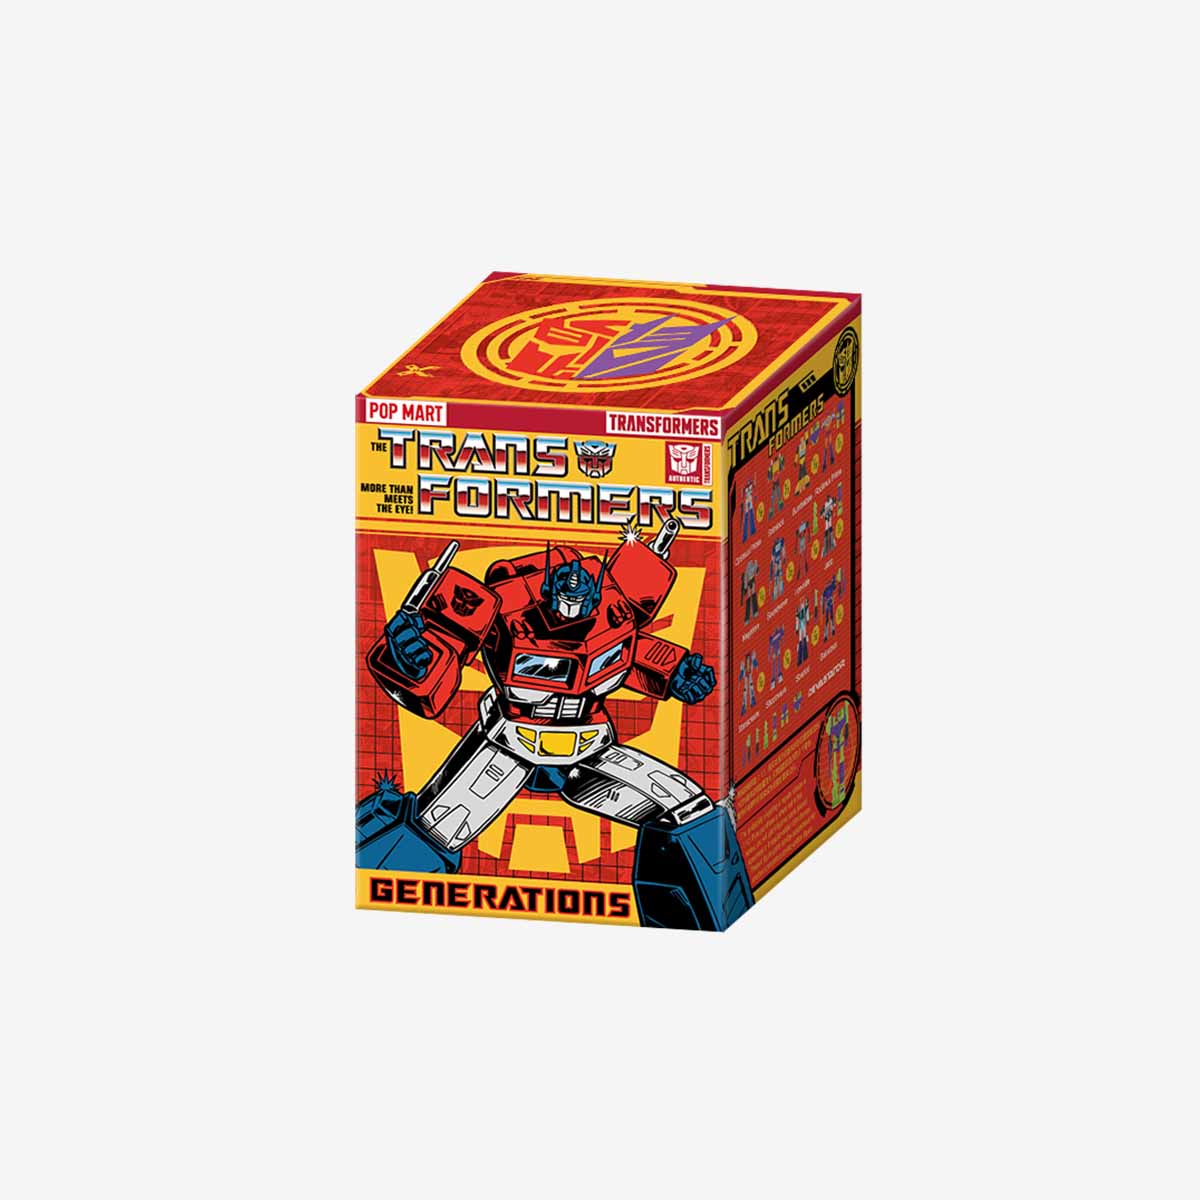 Pop Mart Transformers Generations Blind box